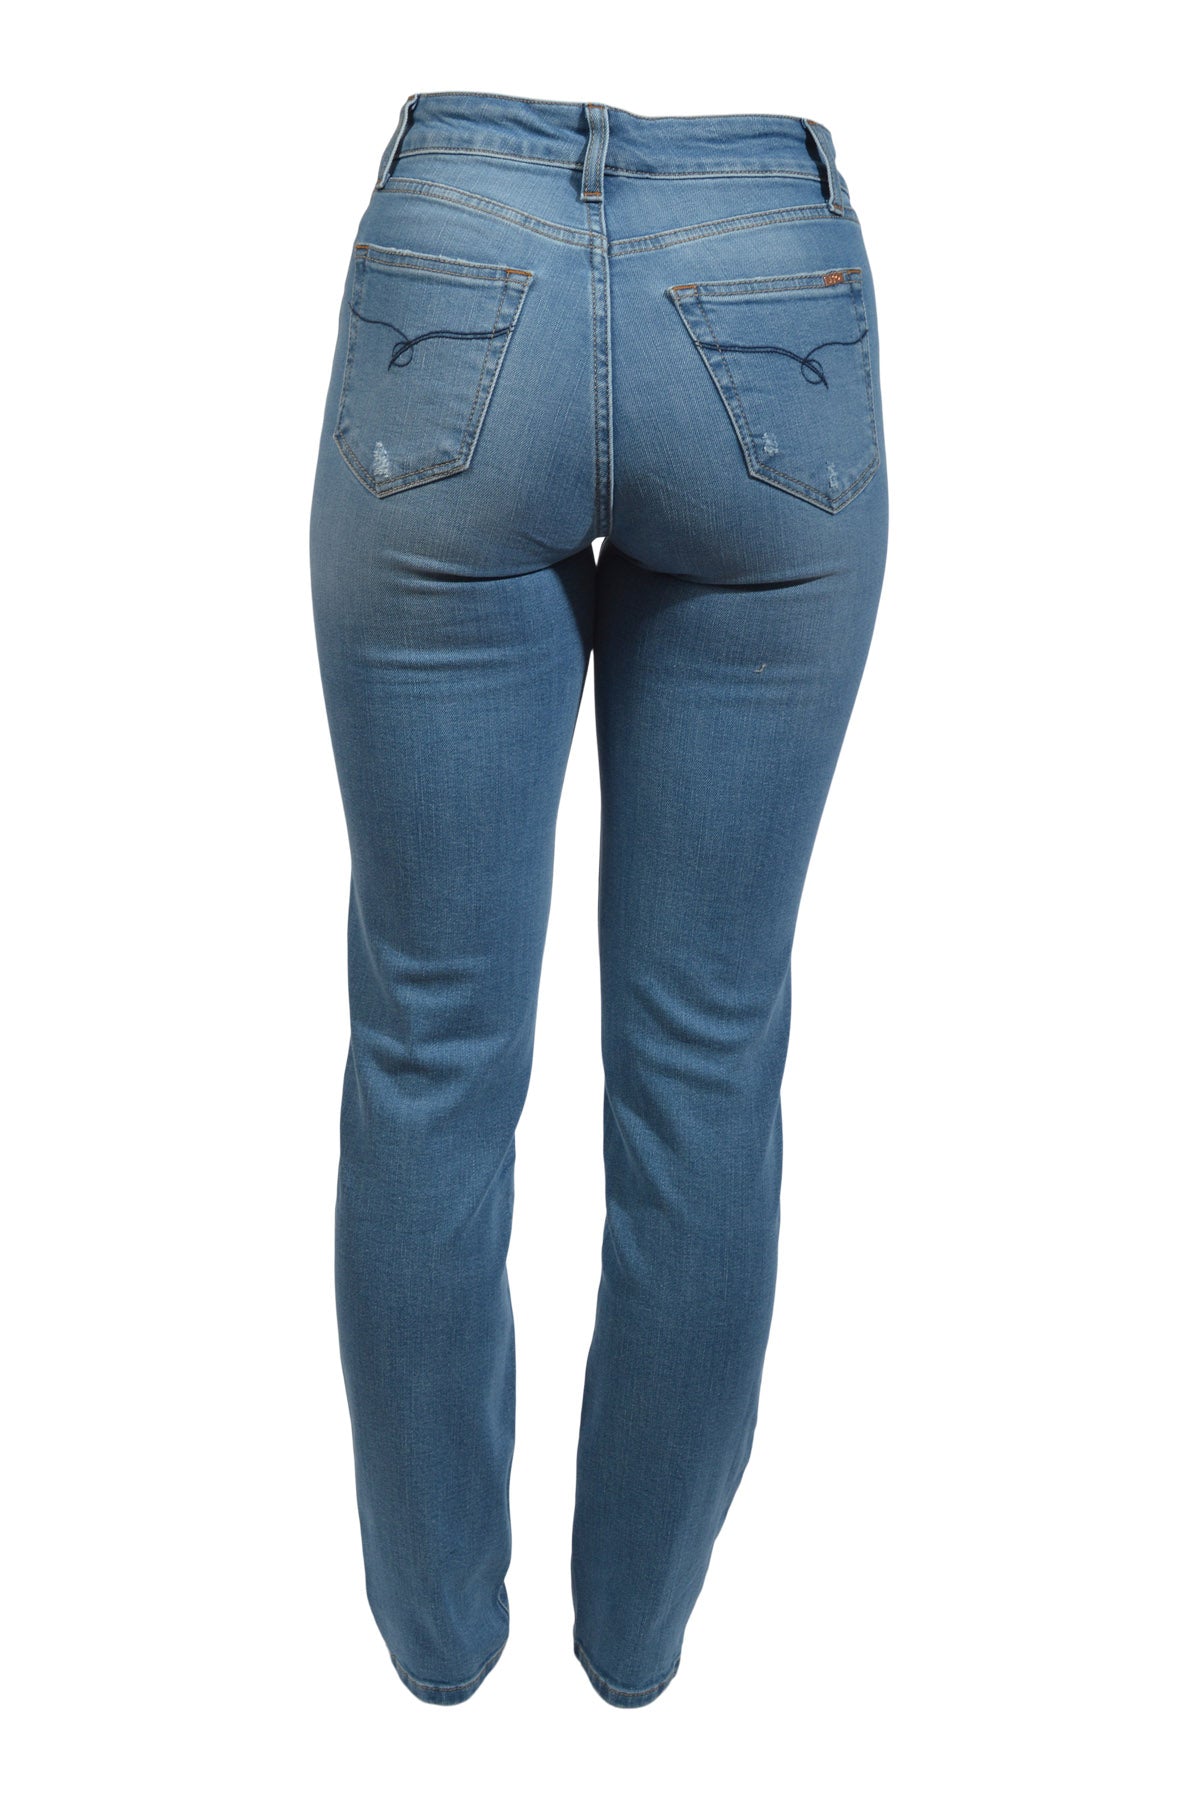 Jonny Q jeans DEBBIE x-fit stretch P1399, Old Used